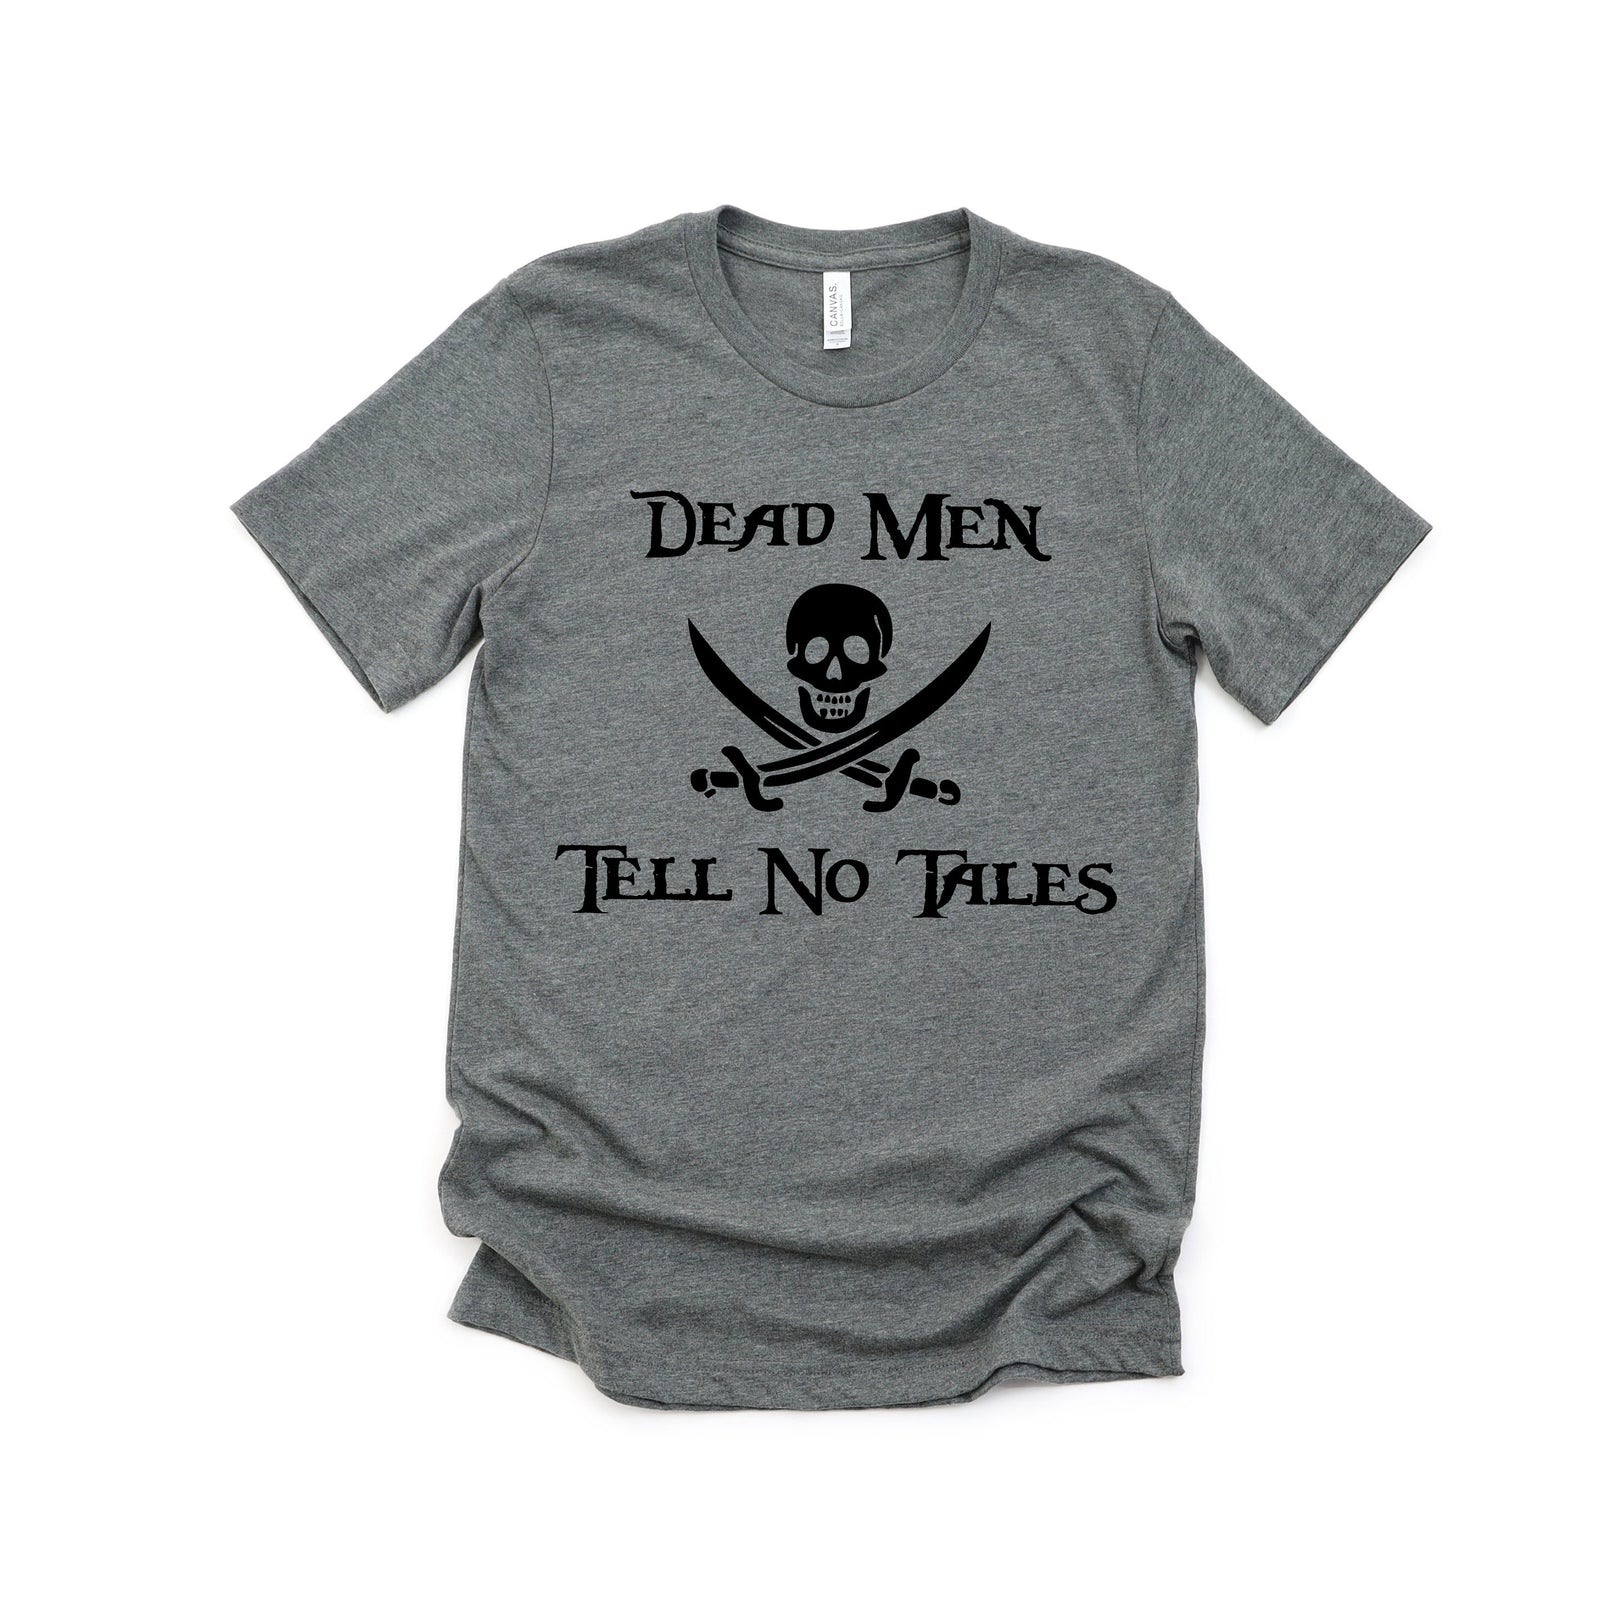 Dead Men Tell No Tales Unisex Adult T Shirt - Pirate- Disney Trip Matching Shirts - Disney Cruise